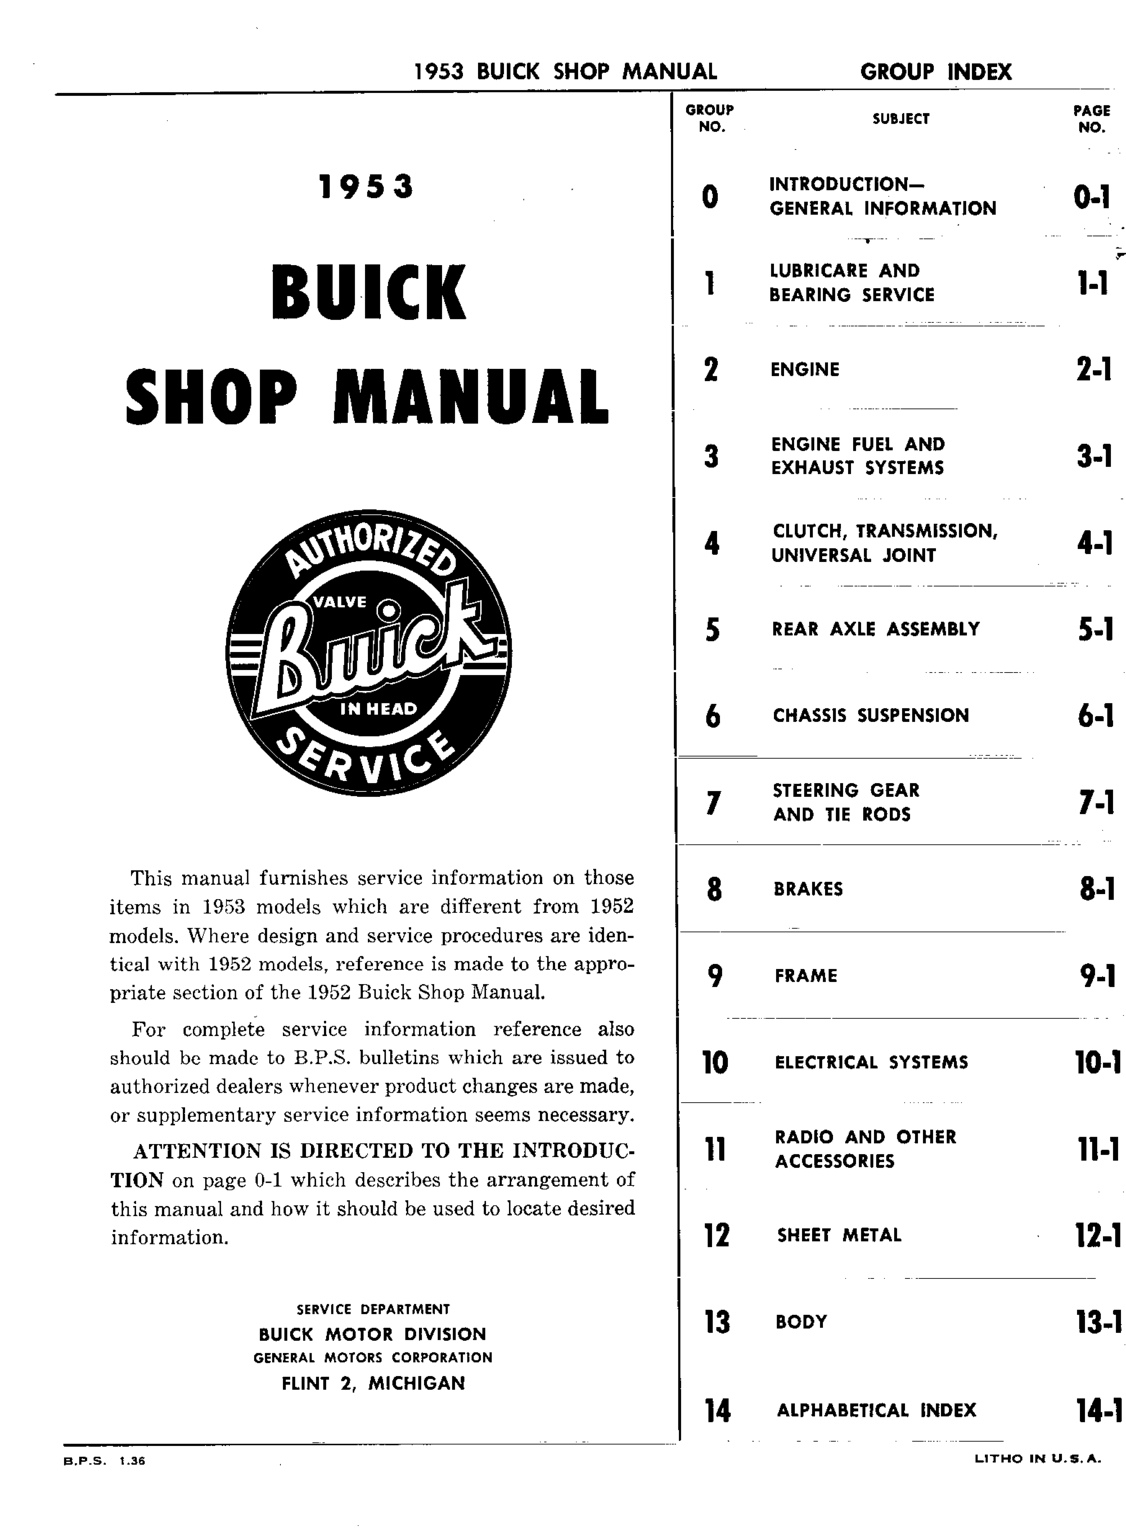 n_01 1953 Buick Shop Manual - Gen Information-001-001.jpg